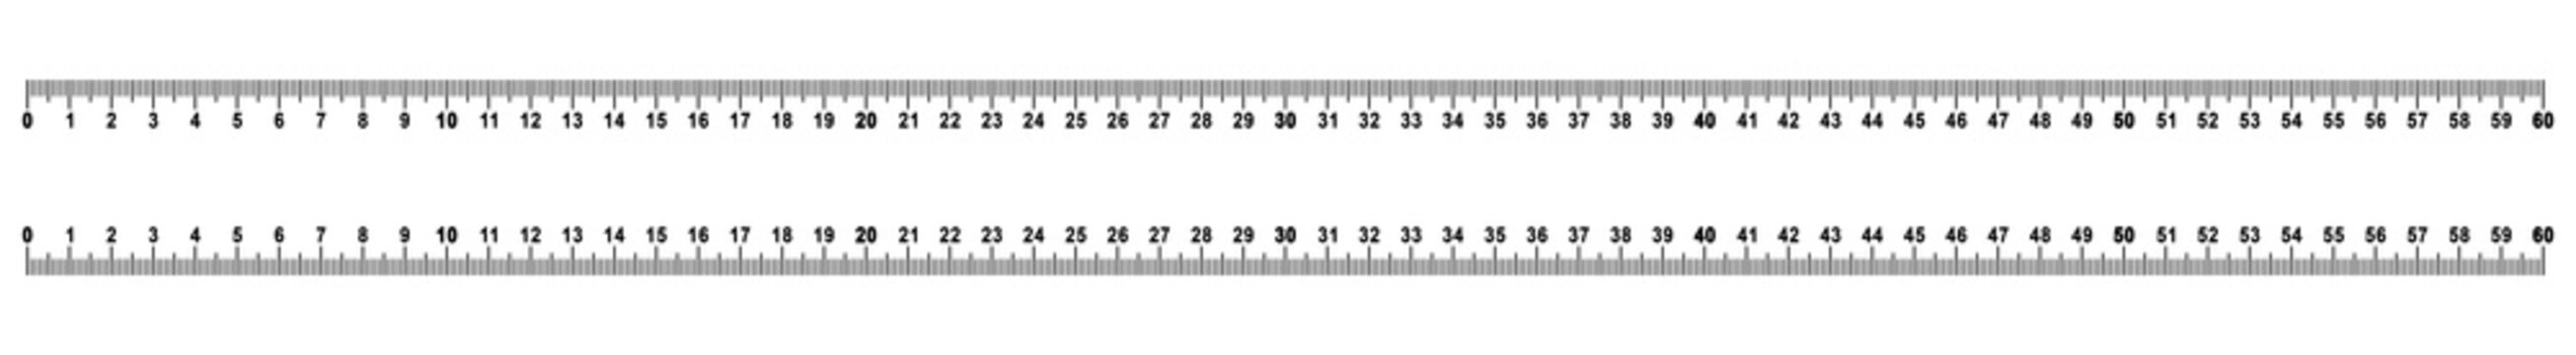 rsmc1 RulerScaleMetricCentimeter rsmc - ruler 0 - 60 cm . measuring tool . ruler scale / length measurement metric centimeter . horizontal - transparent vector illustration . AI10 / EPS10 . g10594